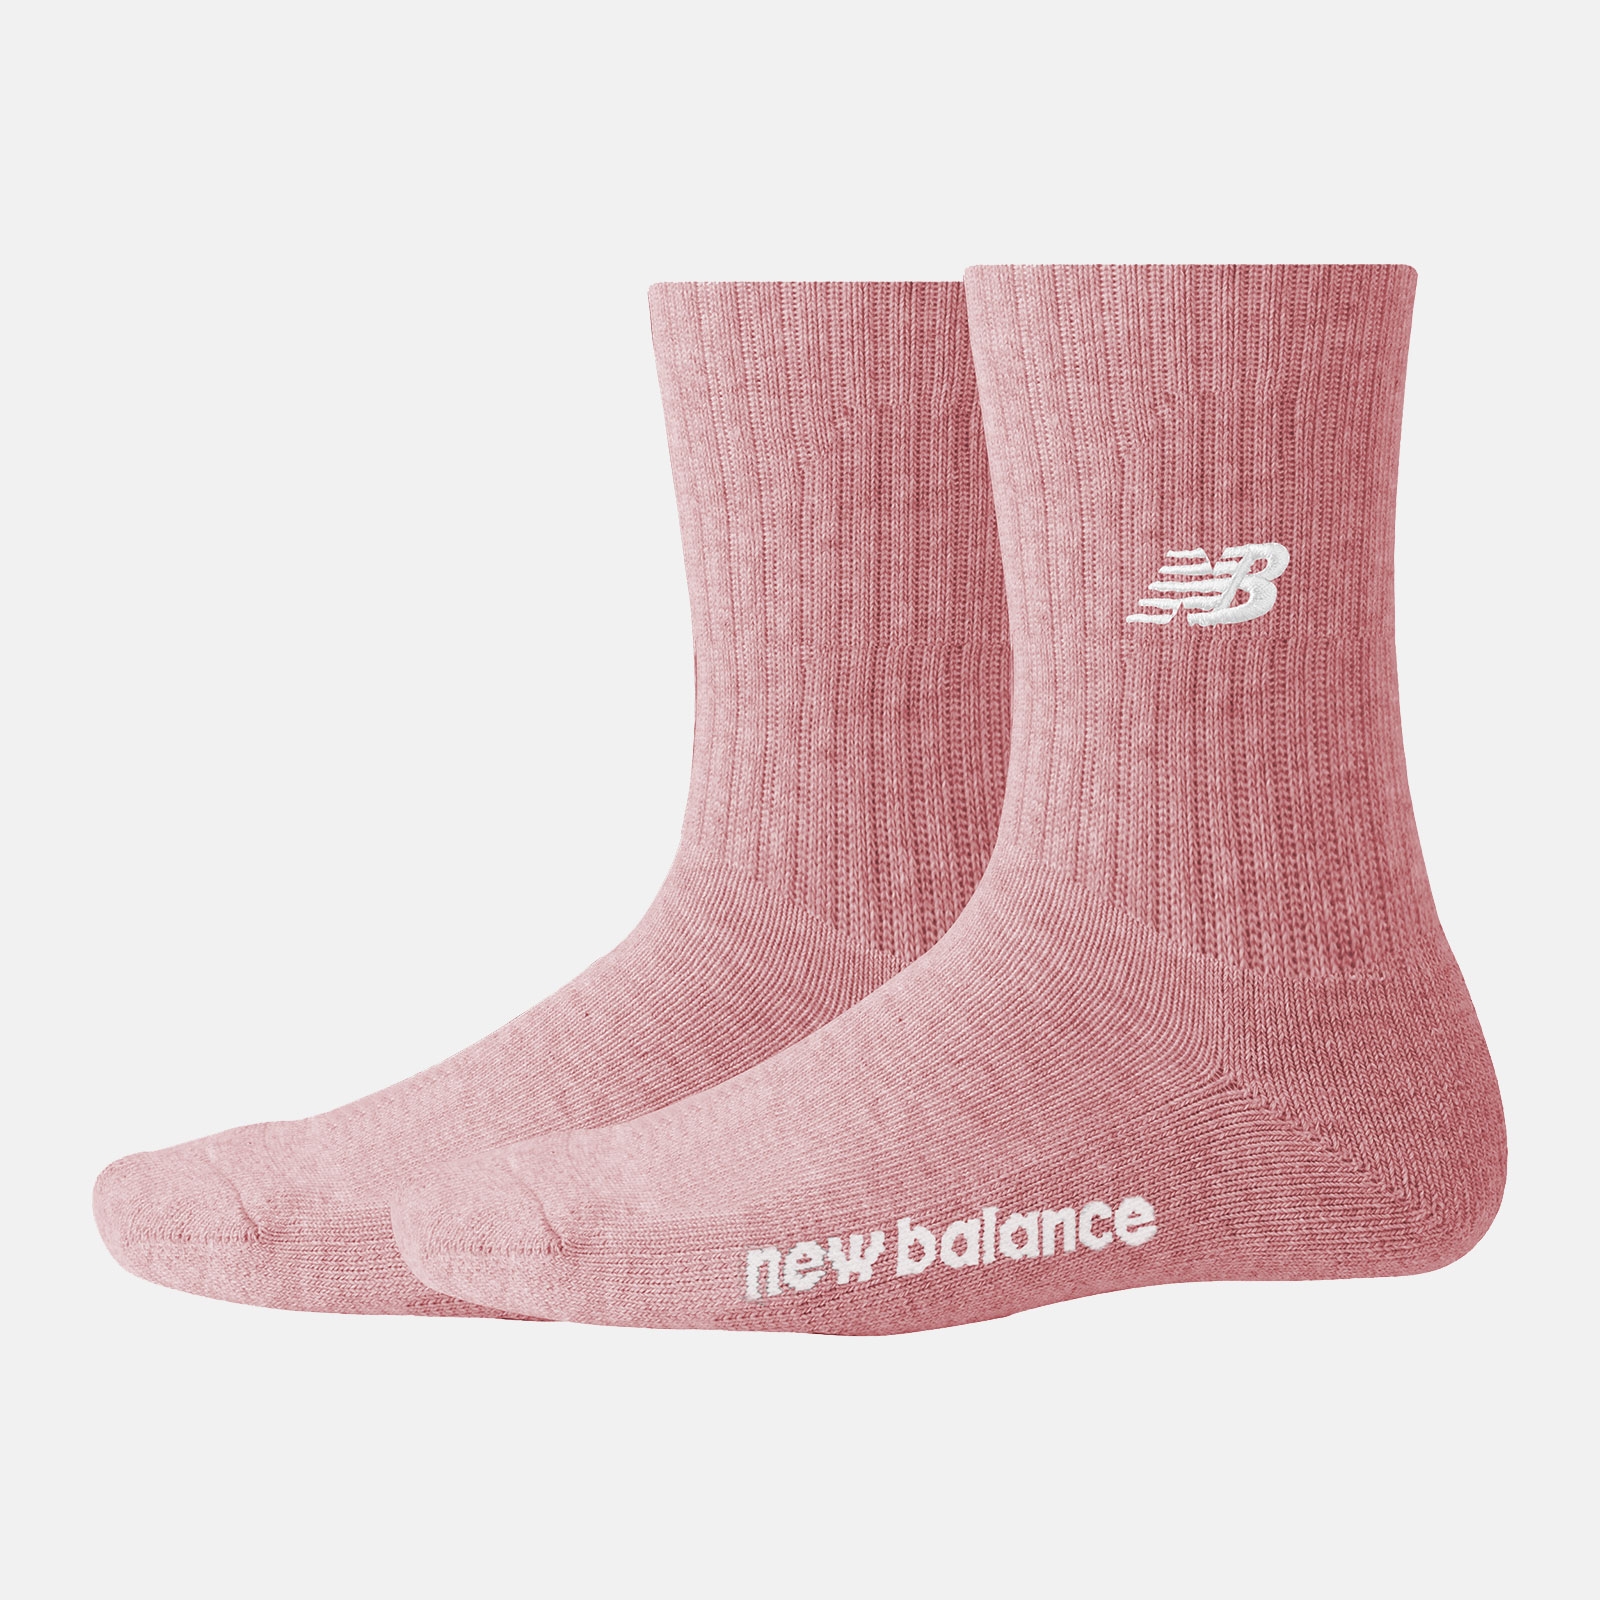 New Balance Medias Lifestyle Natural Ankle LASA32632, Pink, swatch